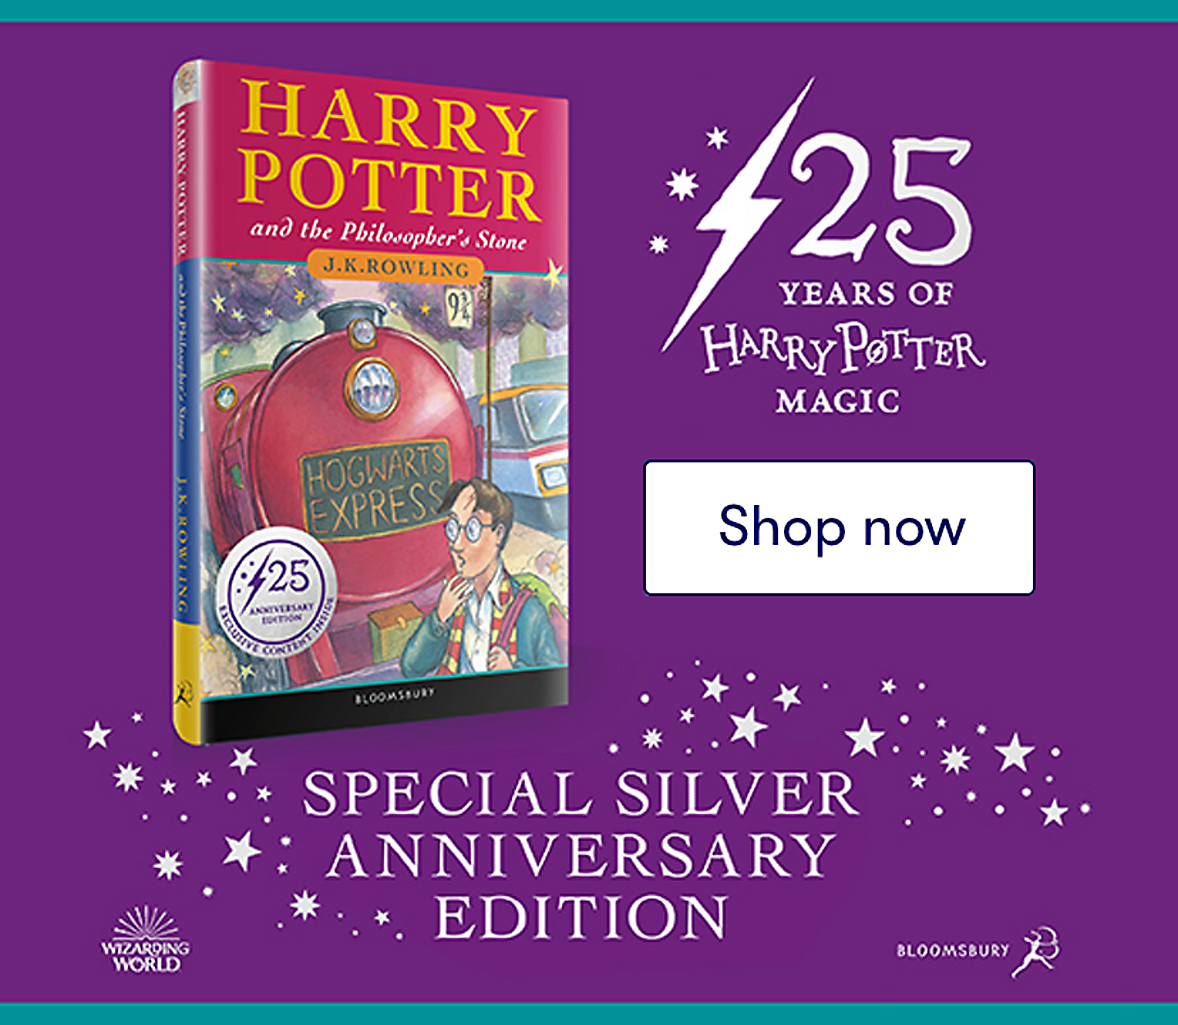 Celebrating 25 Years of Harry Potter Magic